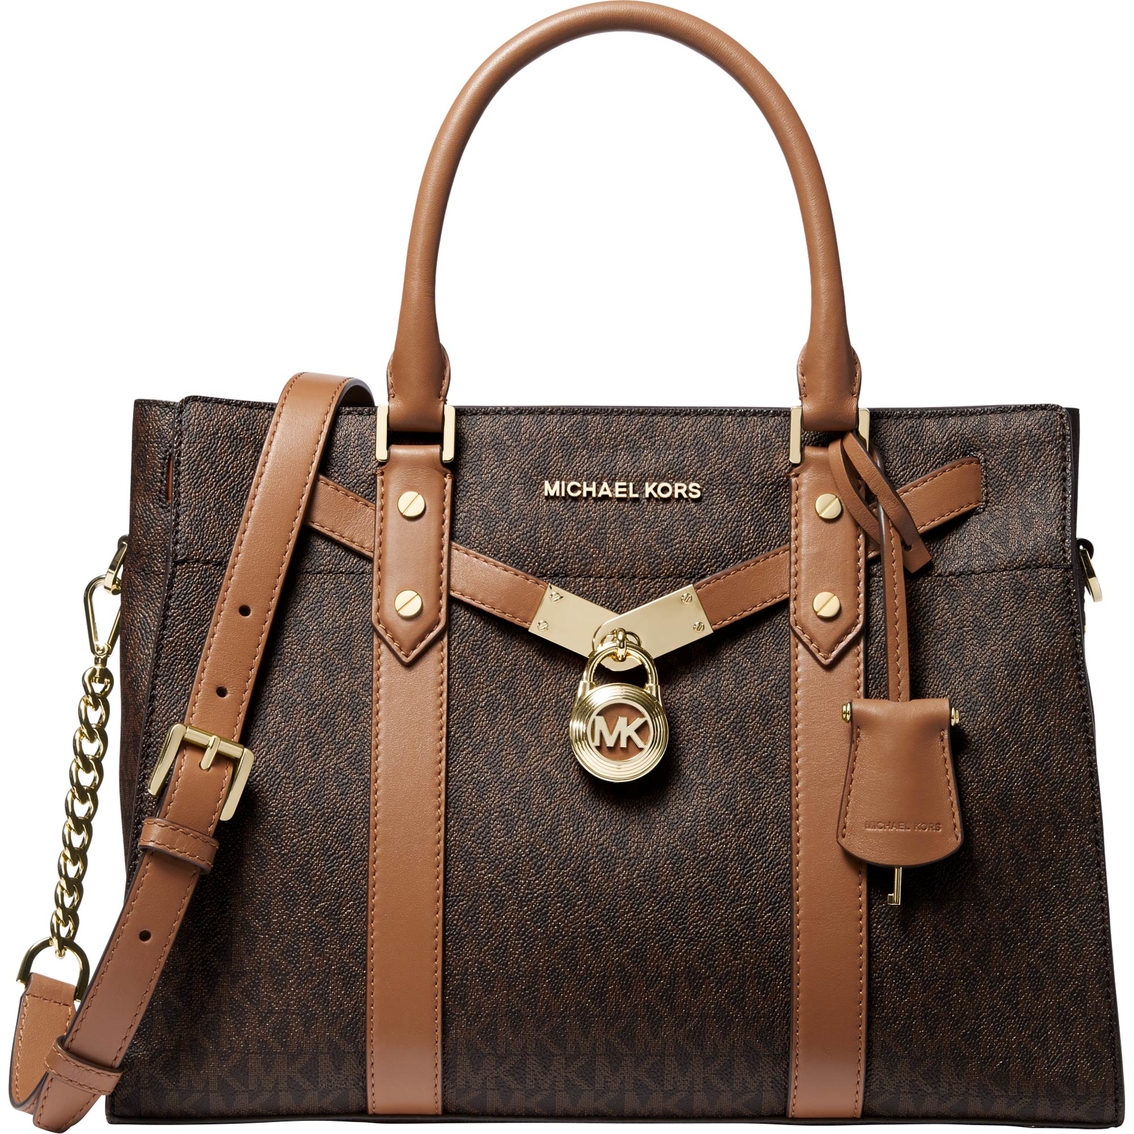 Michael Kors - Authenticated Hamilton Handbag - Leather Brown for Women, Never Worn